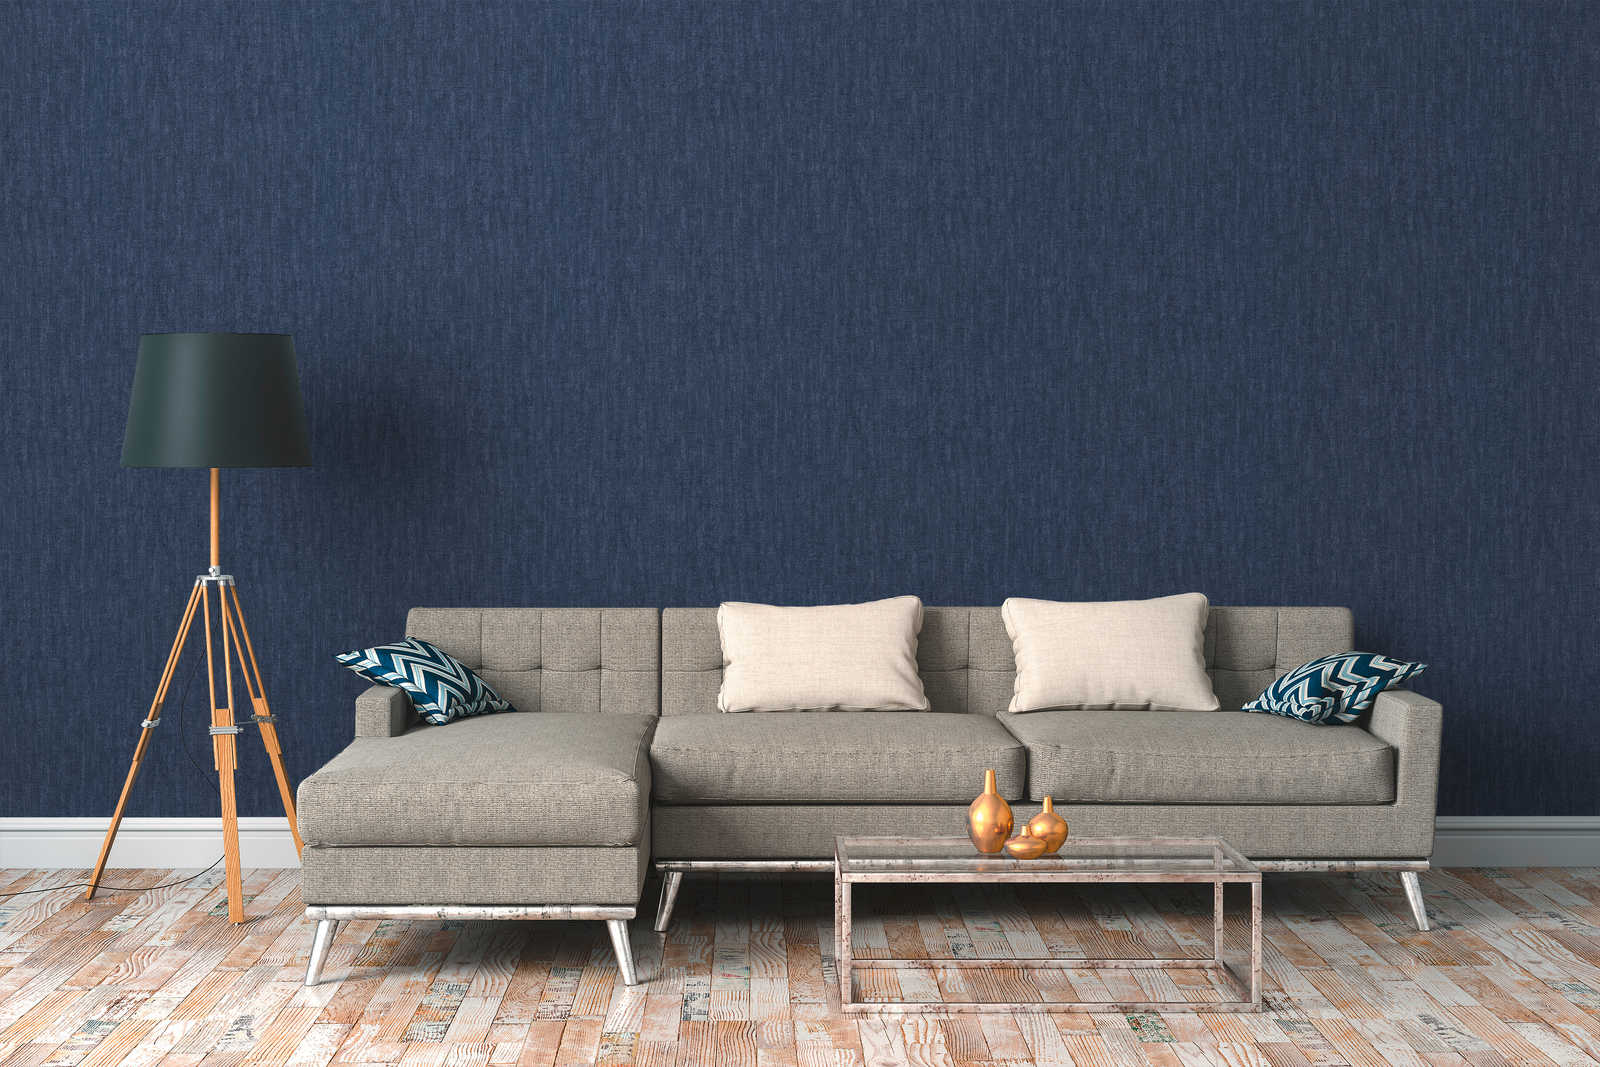             wallpaper dark blue mottled, with structure & gloss effect - blue
        